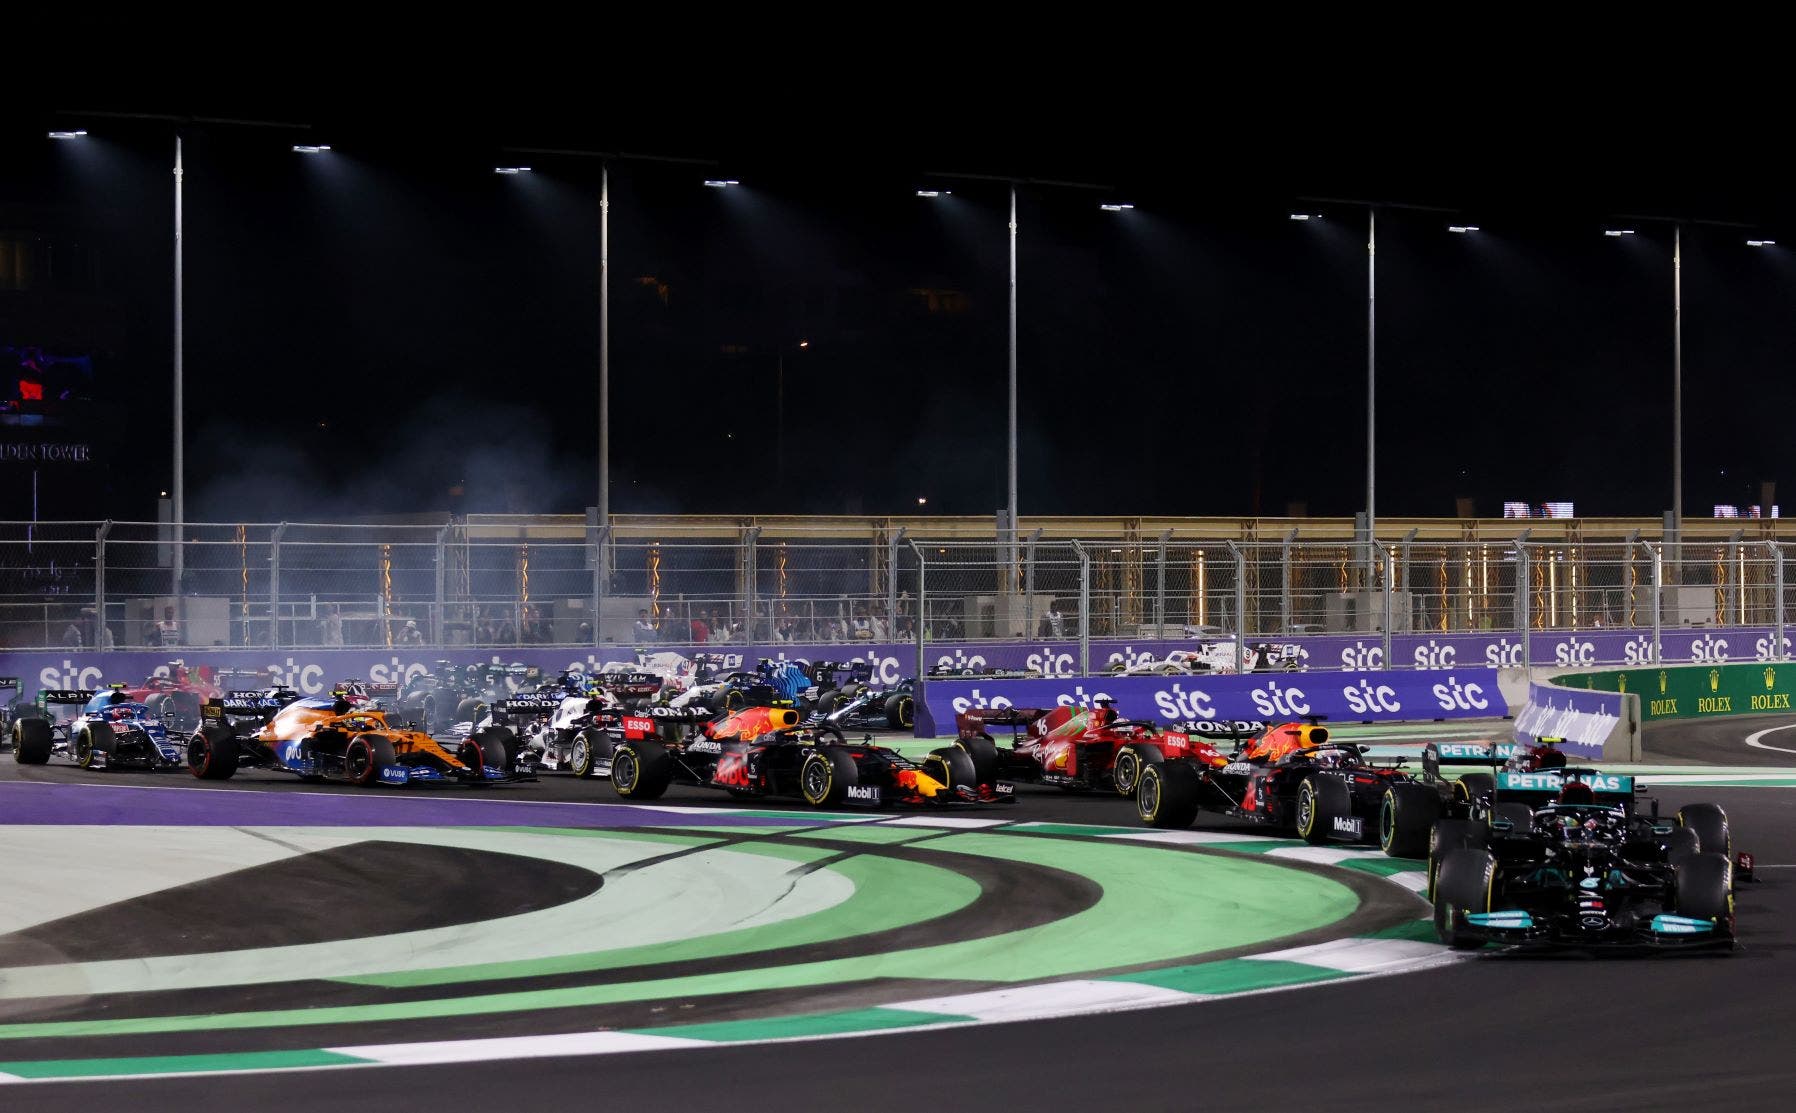 Saudi Arabian Grand Prix at Jeddah Corniche Circuit, Jeddah, Saudi Arabia. General view at the start of the race. (Reuters)